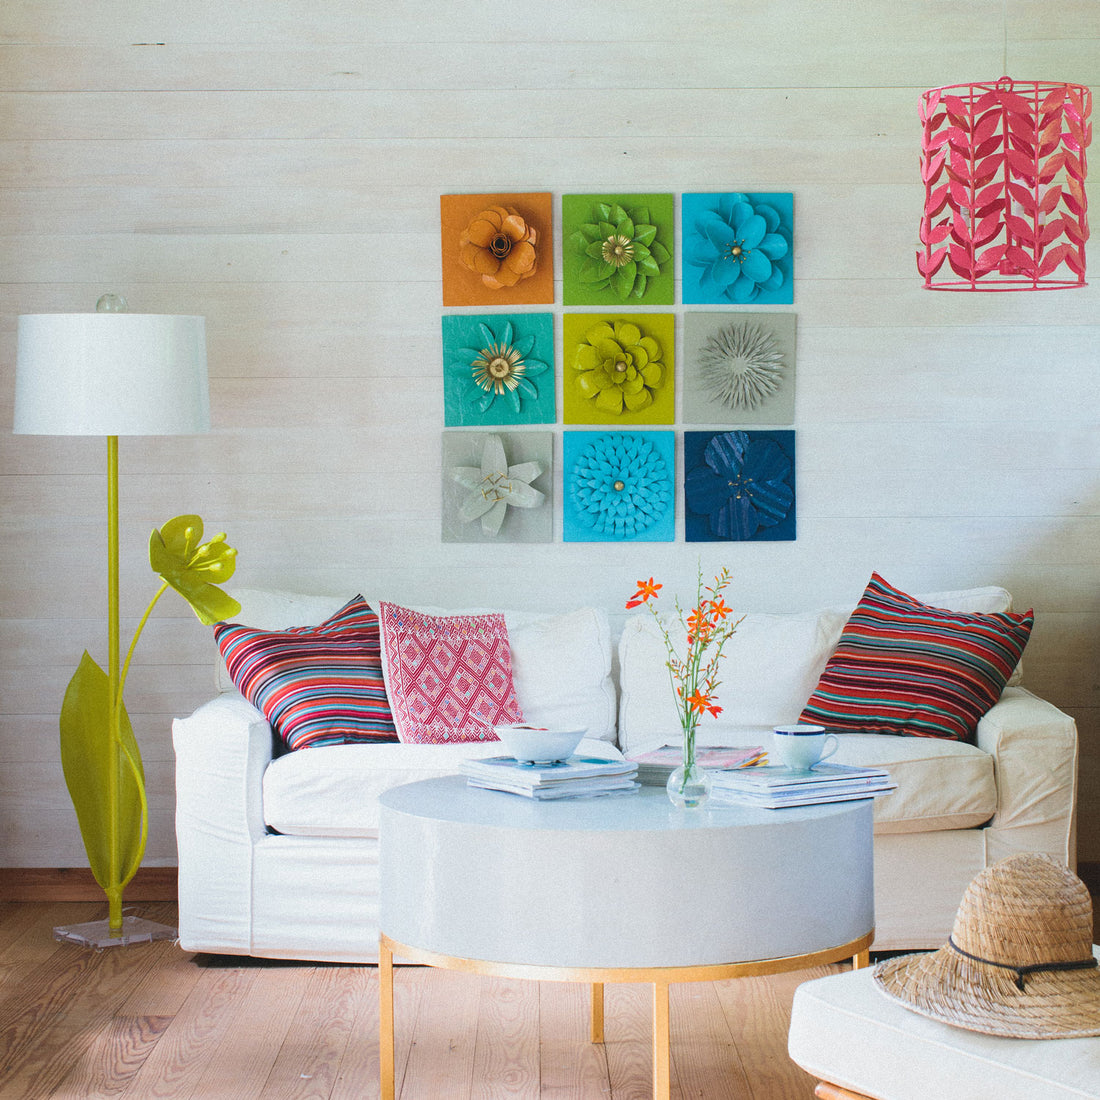 Chrysanthemum Flower Wall Tile in bright living room